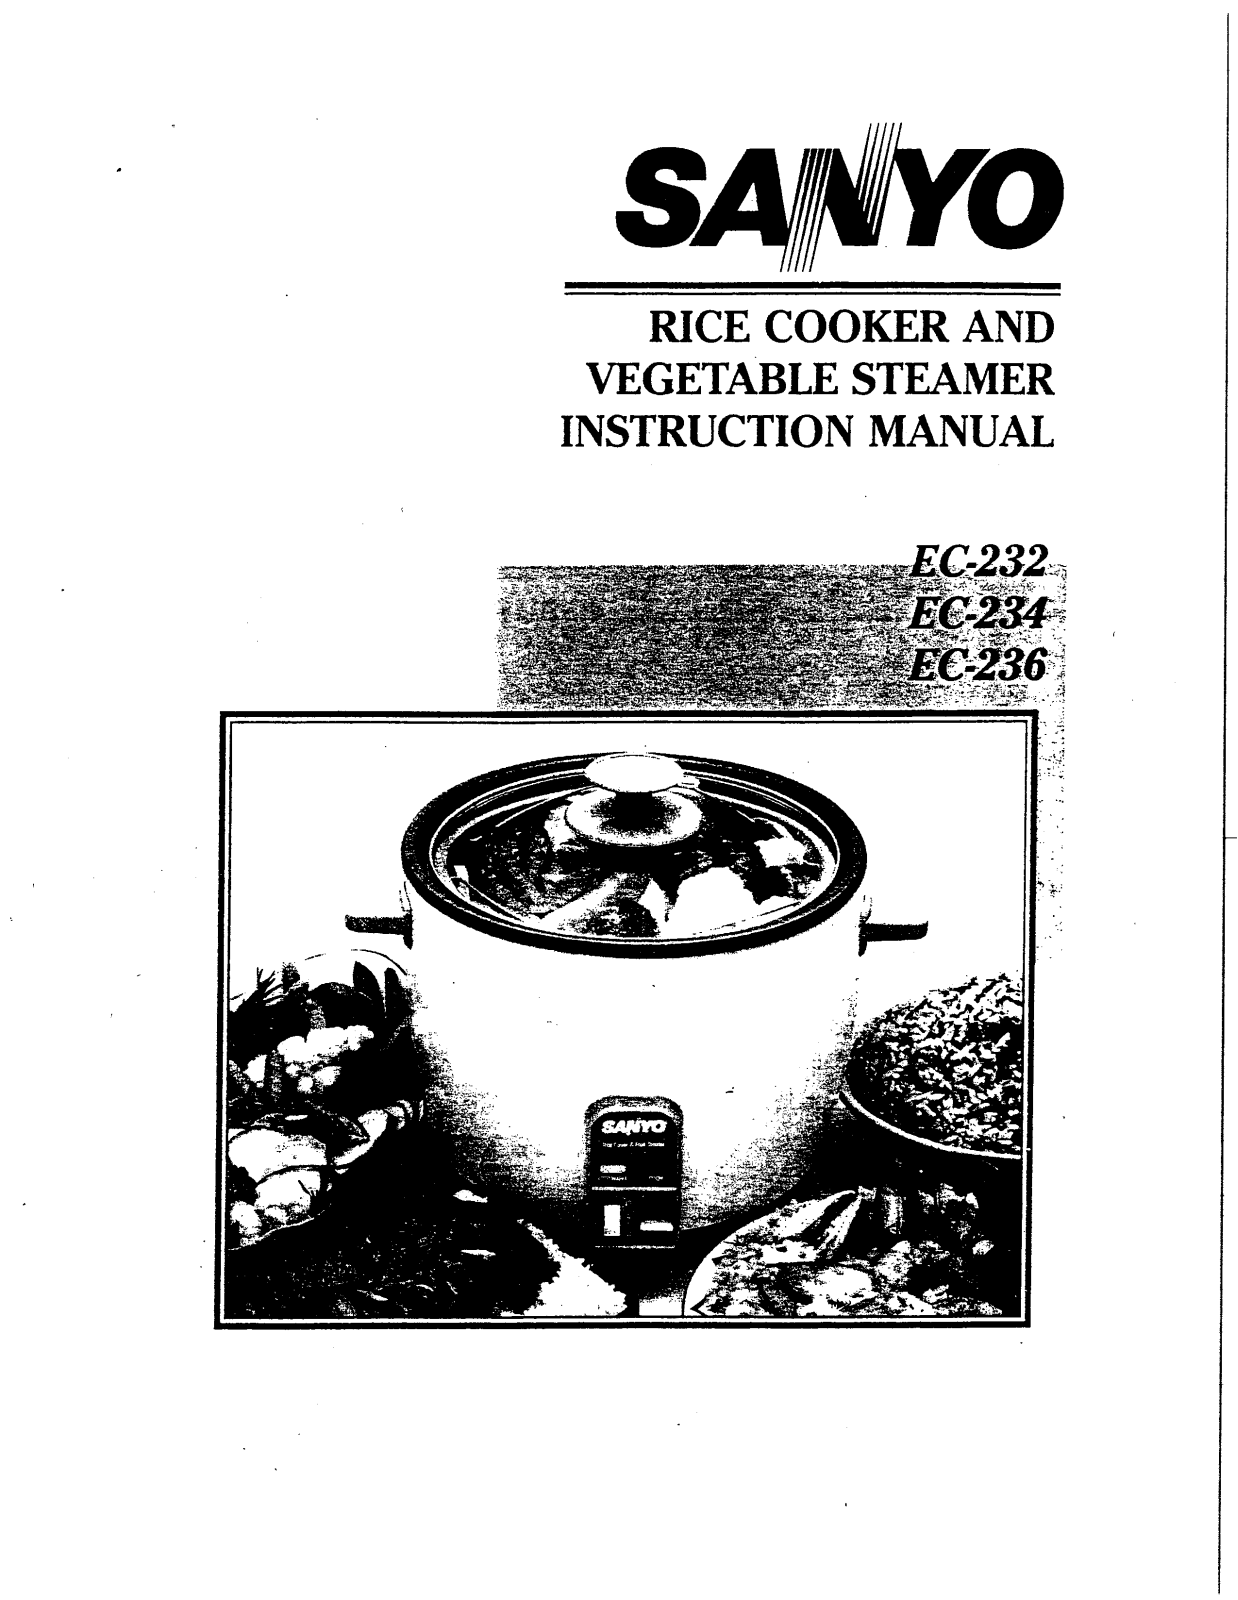 Sanyo EC-236, EC-234 User Manual